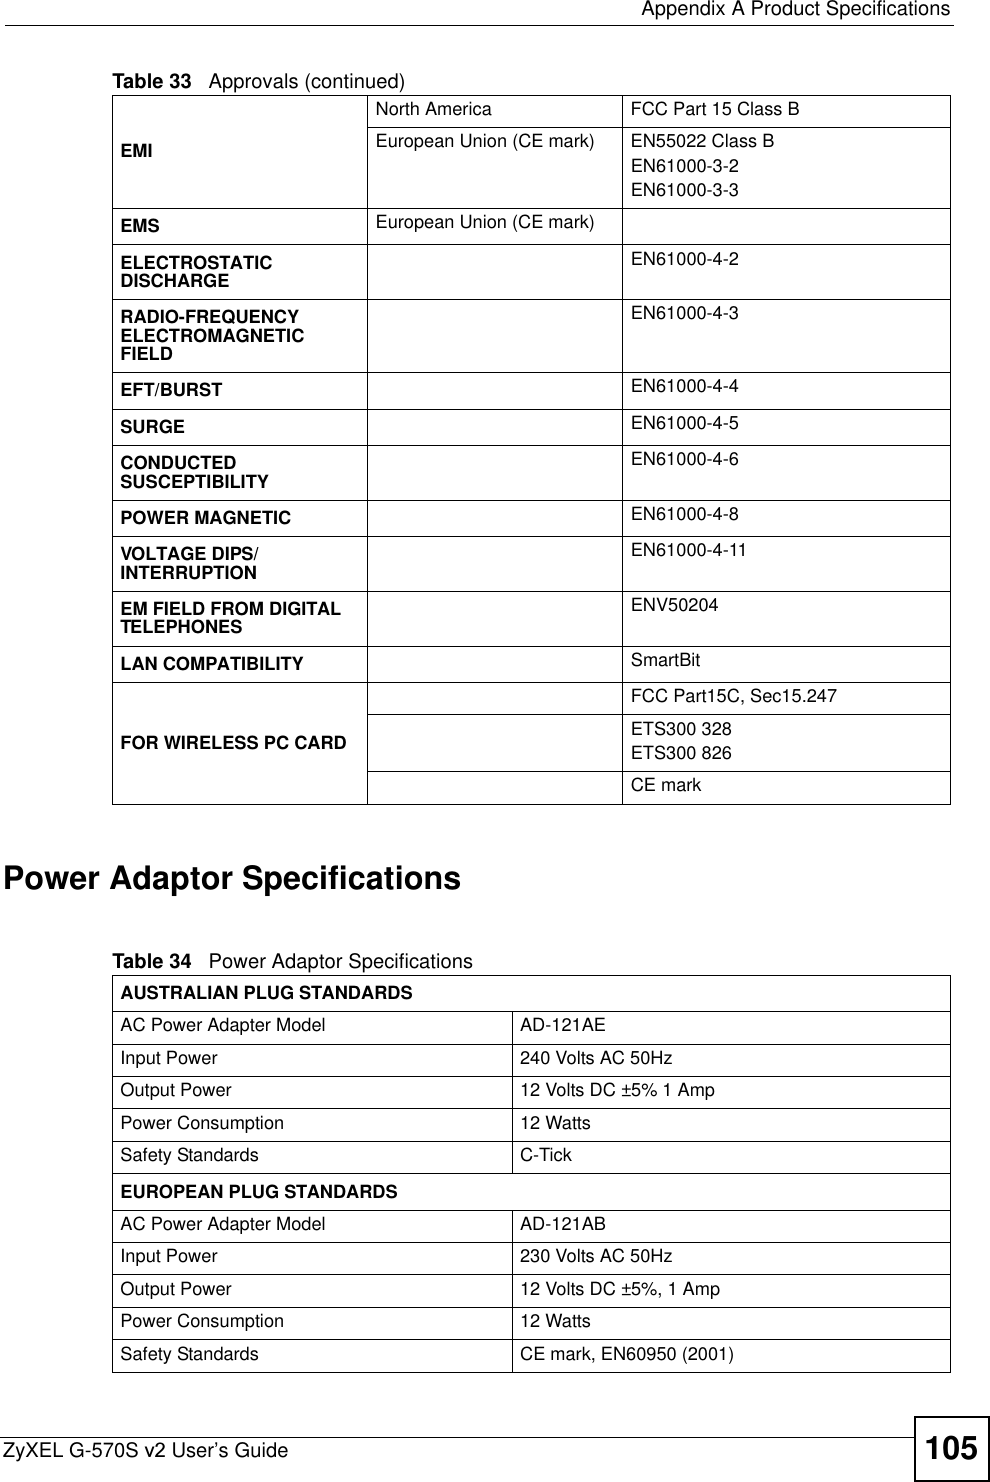  Appendix A Product SpecificationsZyXEL G-570S v2 User’s Guide 105Power Adaptor SpecificationsEMINorth America FCC Part 15 Class BEuropean Union (CE mark) EN55022 Class BEN61000-3-2EN61000-3-3EMS European Union (CE mark)ELECTROSTATIC DISCHARGE EN61000-4-2RADIO-FREQUENCY ELECTROMAGNETICFIELDEN61000-4-3EFT/BURST EN61000-4-4SURGE EN61000-4-5CONDUCTED SUSCEPTIBILITY EN61000-4-6POWER MAGNETIC EN61000-4-8VOLTAGE DIPS/INTERRUPTION EN61000-4-11EM FIELD FROM DIGITAL TELEPHONES ENV50204LAN COMPATIBILITY SmartBitFOR WIRELESS PC CARD FCC Part15C, Sec15.247ETS300 328ETS300 826CE markTable 33   Approvals (continued)Table 34   Power Adaptor SpecificationsAUSTRALIAN PLUG STANDARDSAC Power Adapter Model AD-121AEInput Power 240 Volts AC 50Hz Output Power 12 Volts DC ±5% 1 AmpPower Consumption 12 WattsSafety Standards  C-TickEUROPEAN PLUG STANDARDSAC Power Adapter Model AD-121ABInput Power 230 Volts AC 50Hz Output Power 12 Volts DC ±5%, 1 Amp Power Consumption 12 WattsSafety Standards  CE mark, EN60950 (2001)